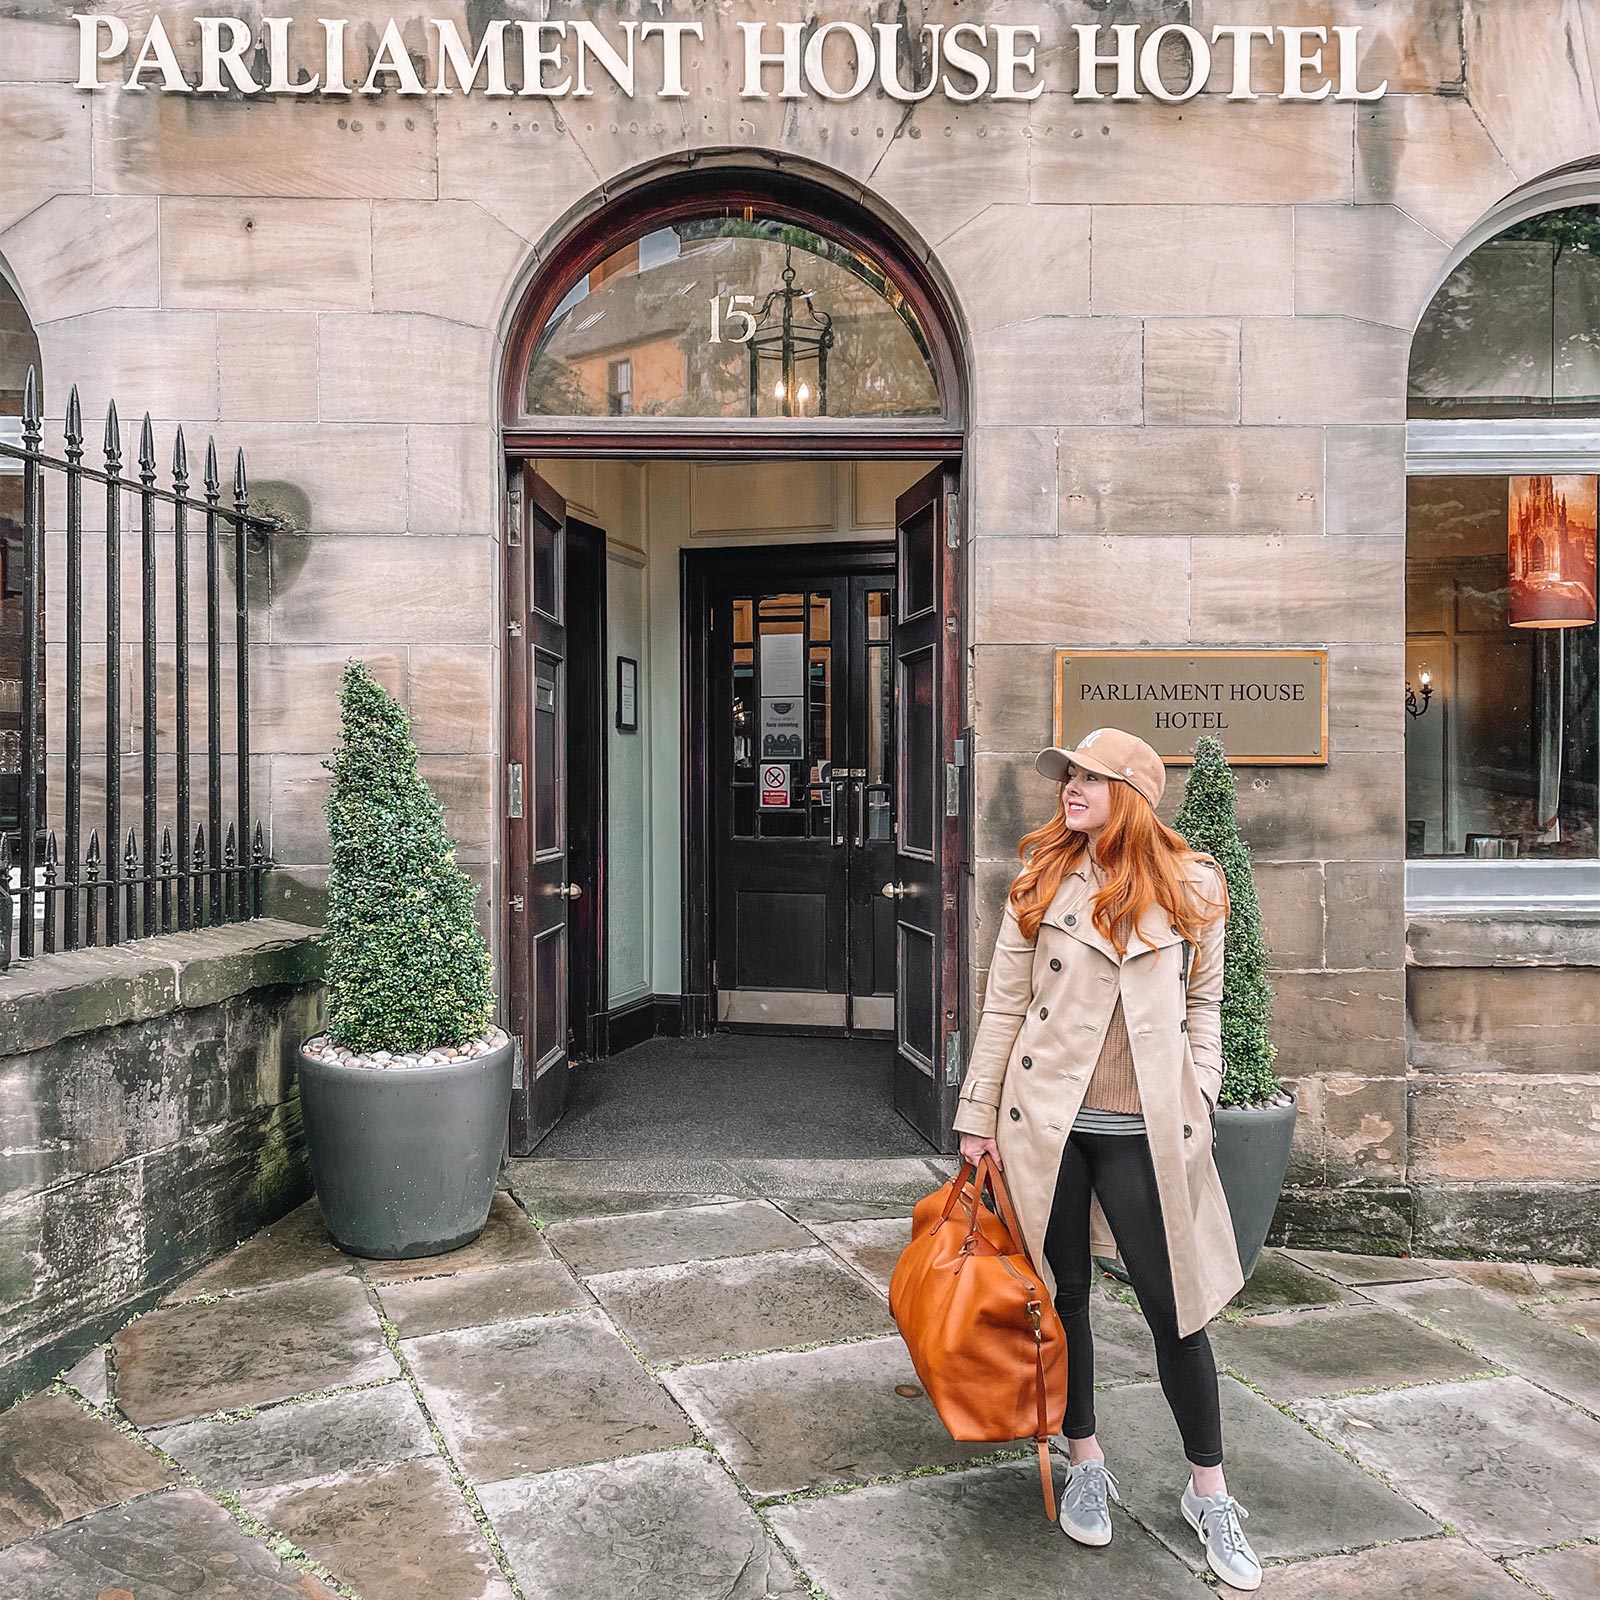 Parliament House Hotel, Edinburgh, Scotland